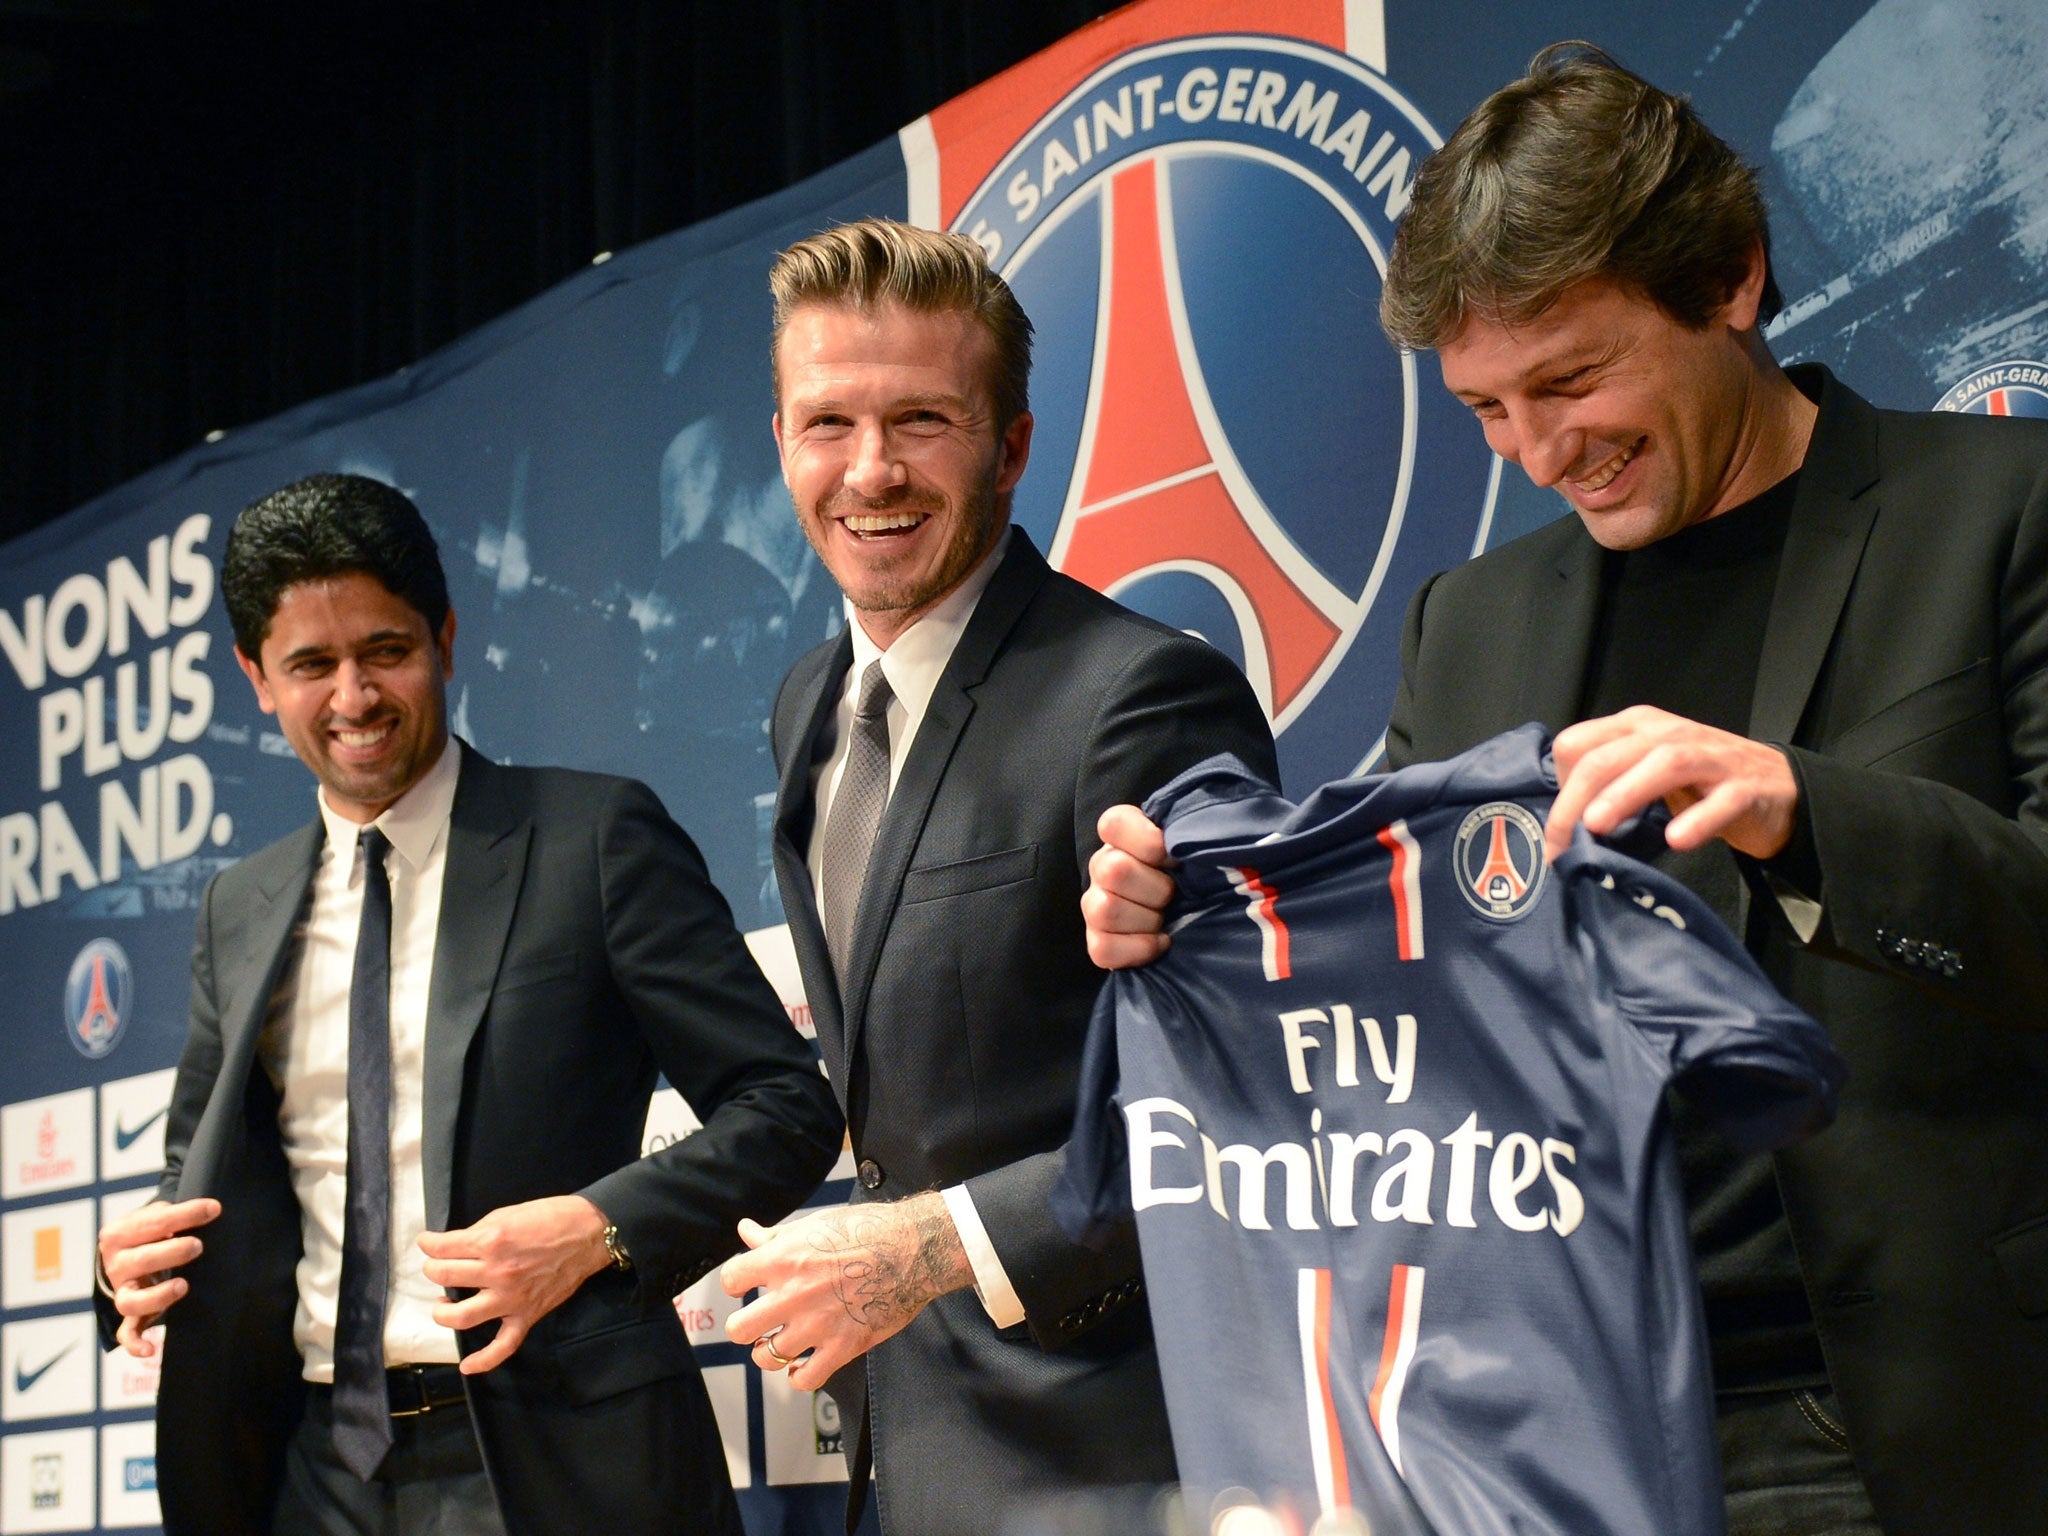 David Beckham is unveiled as a Paris Saint-Germain player by the club president, Nasser al-Khelaifi, and director of football, Leonardo